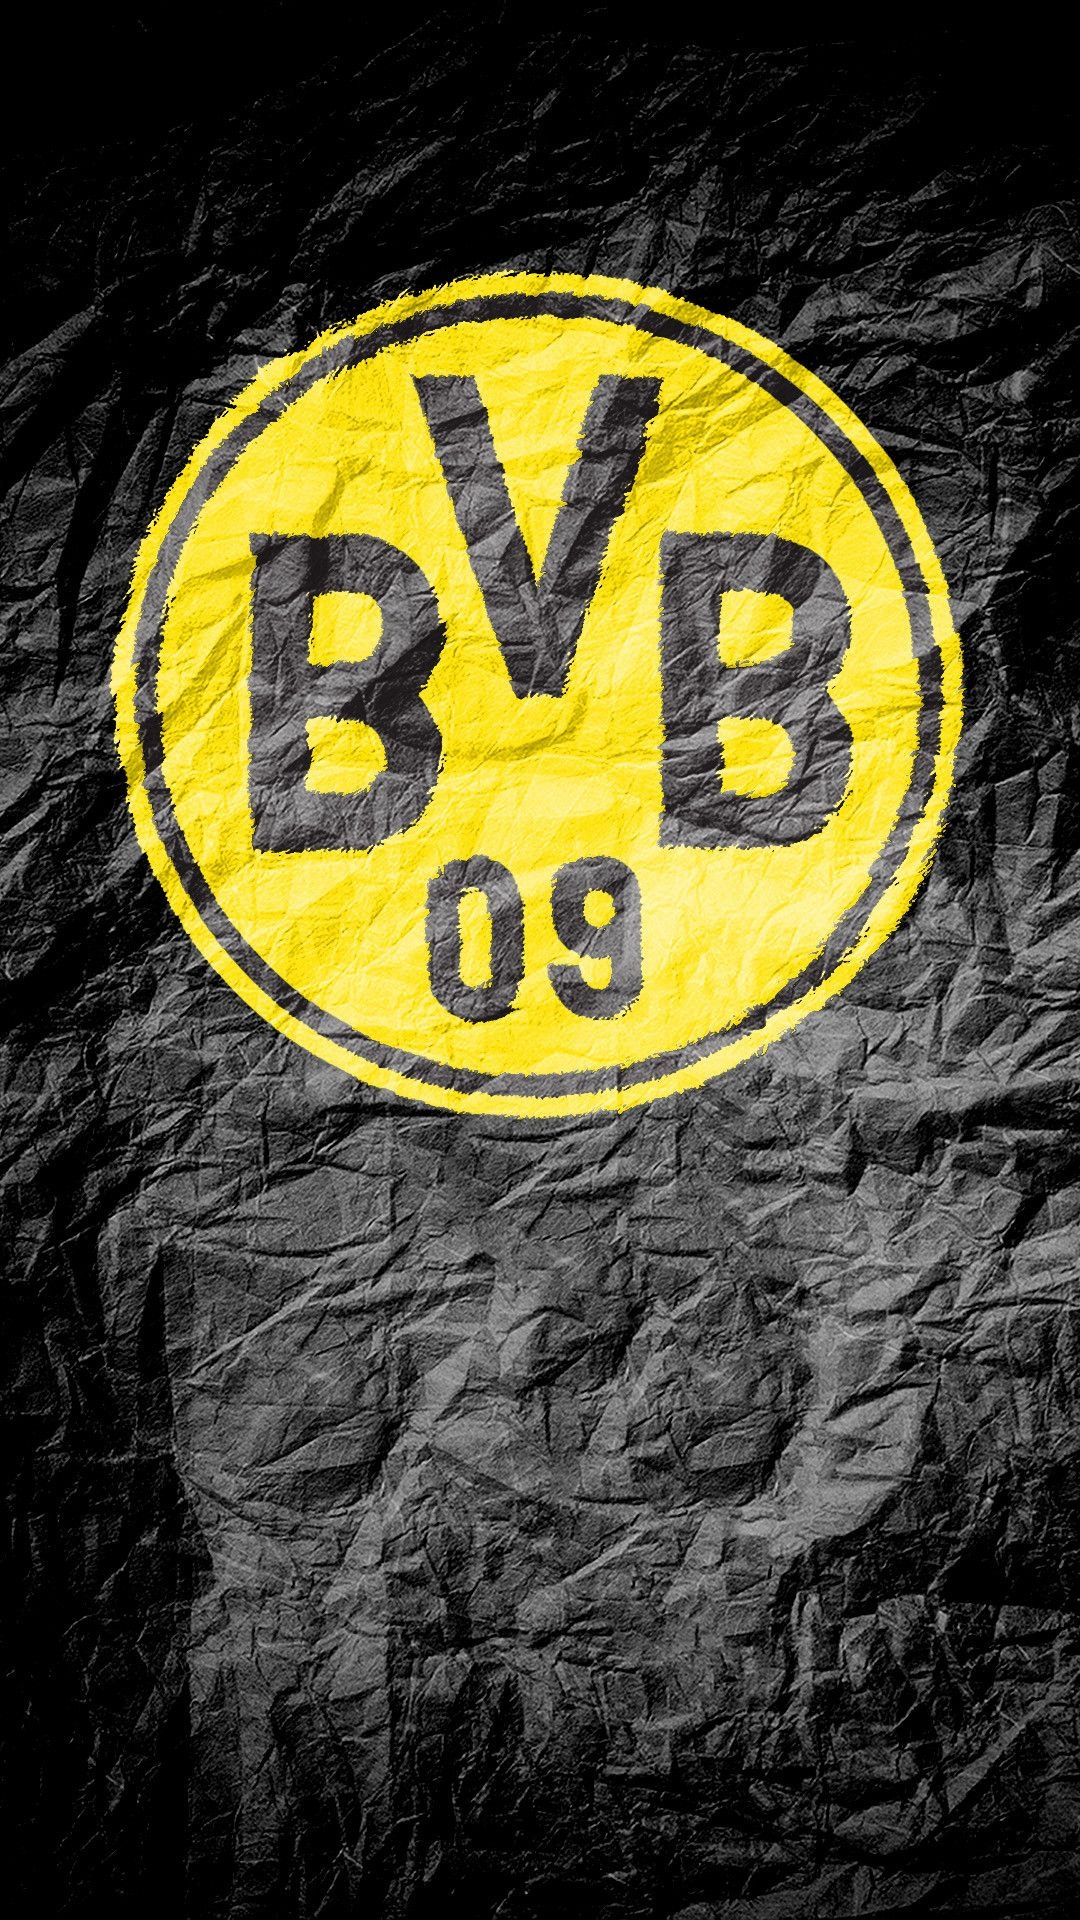 Borussia Dortmund: The second richest club in Germany after Bayern Munich. 1080x1920 Full HD Background.